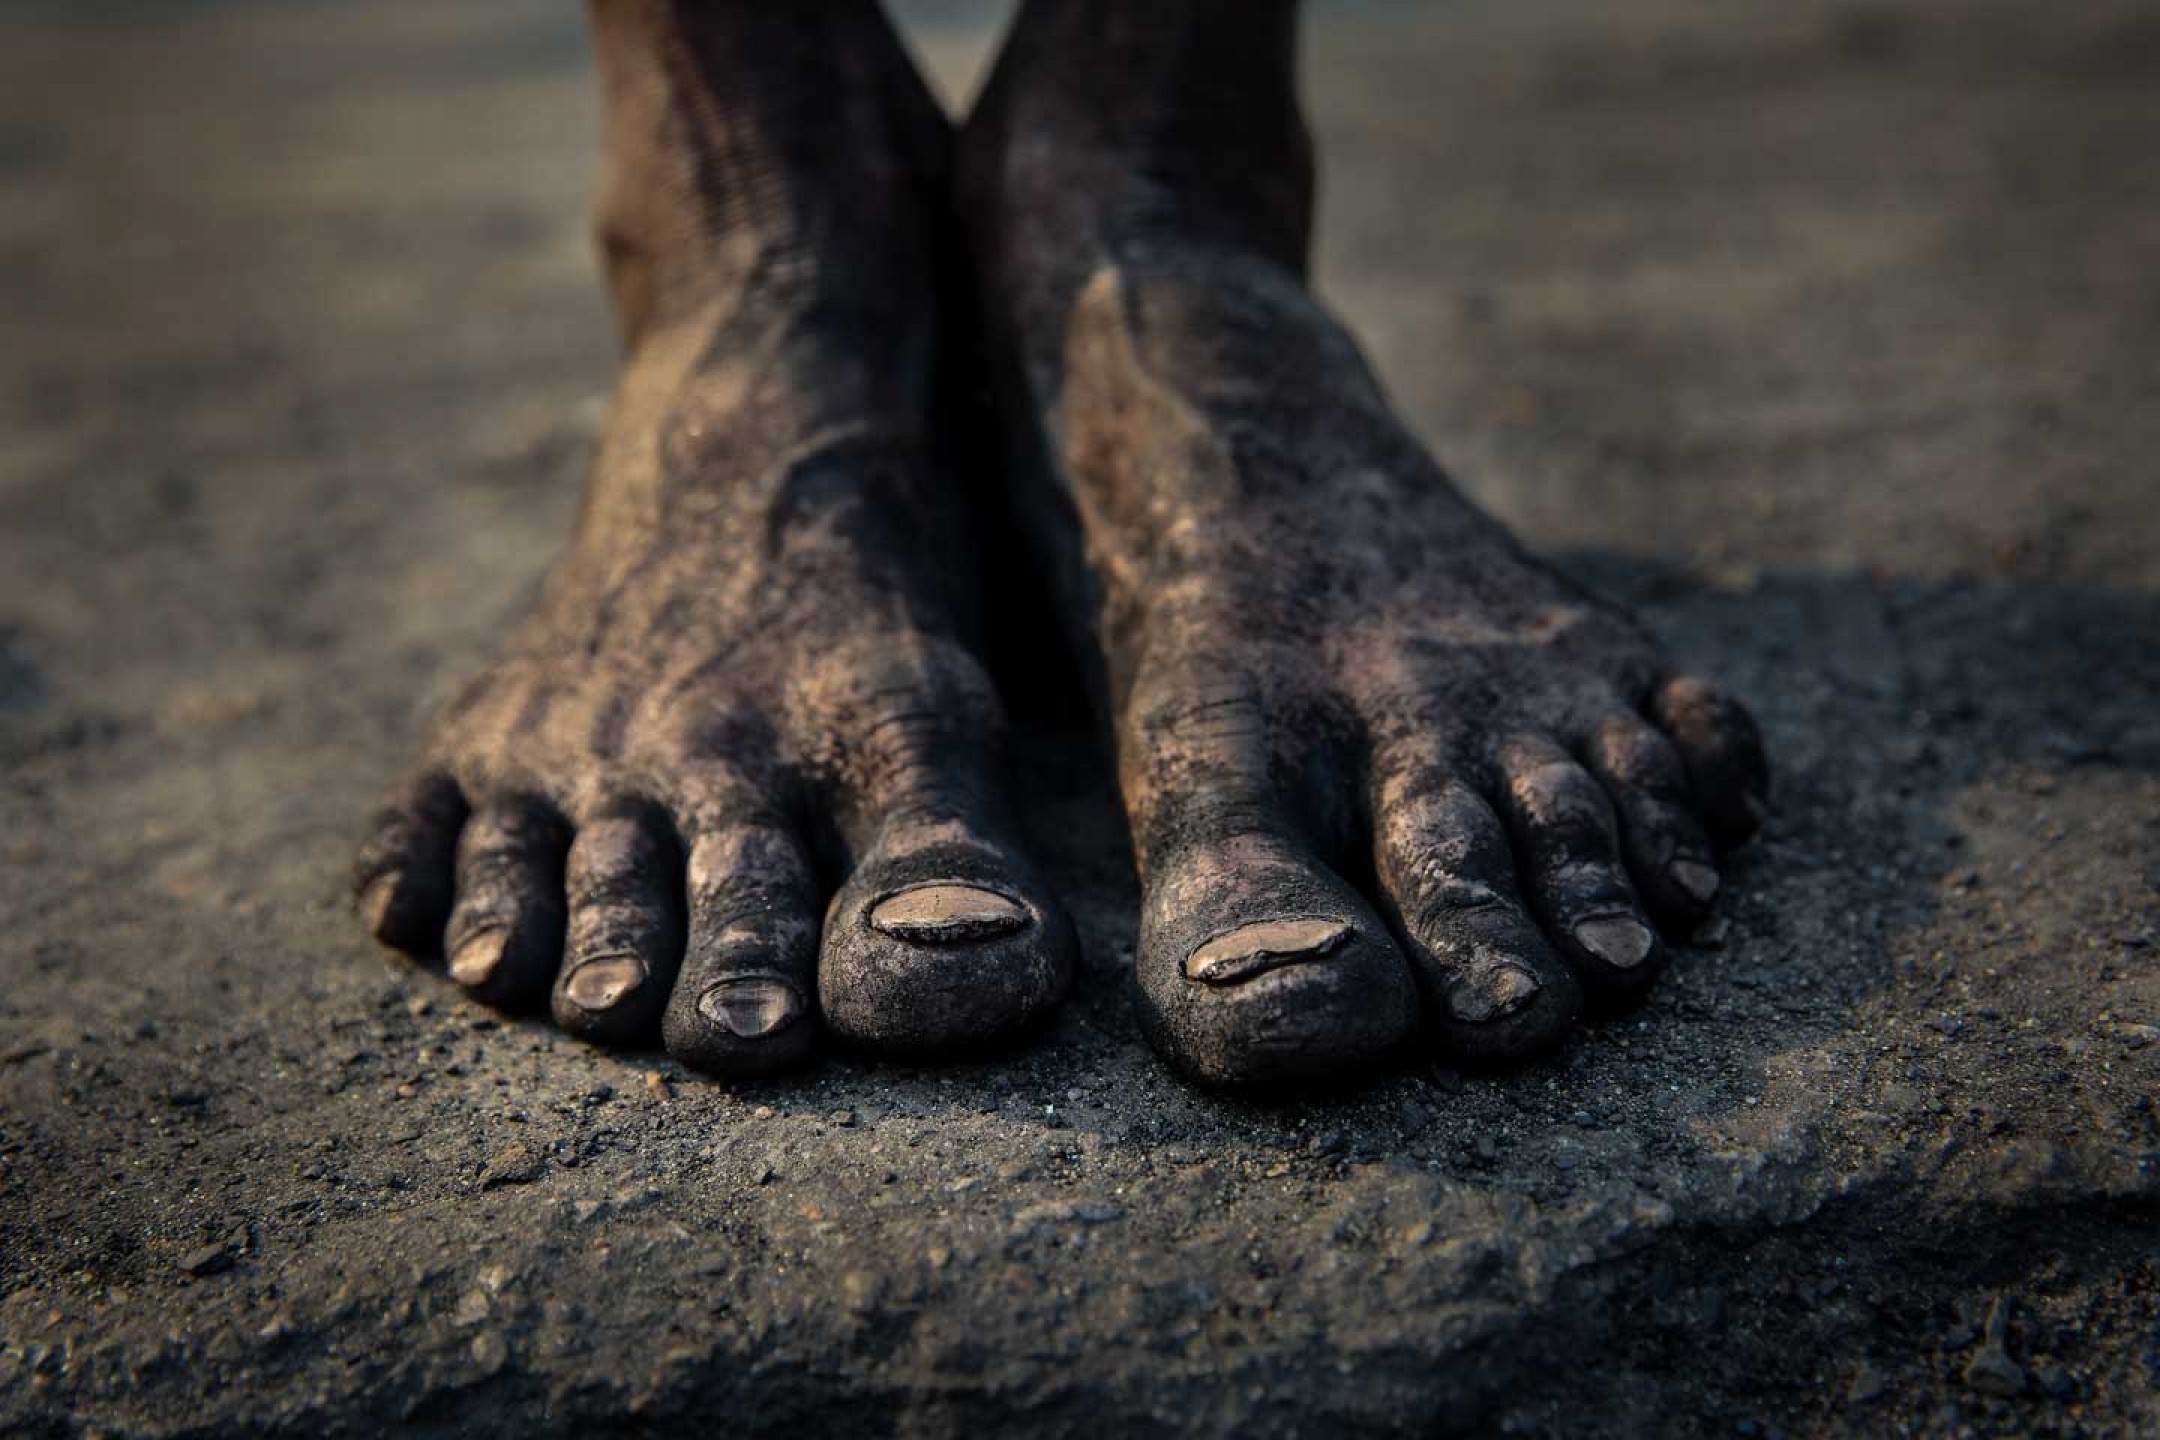 Feet tells stories.